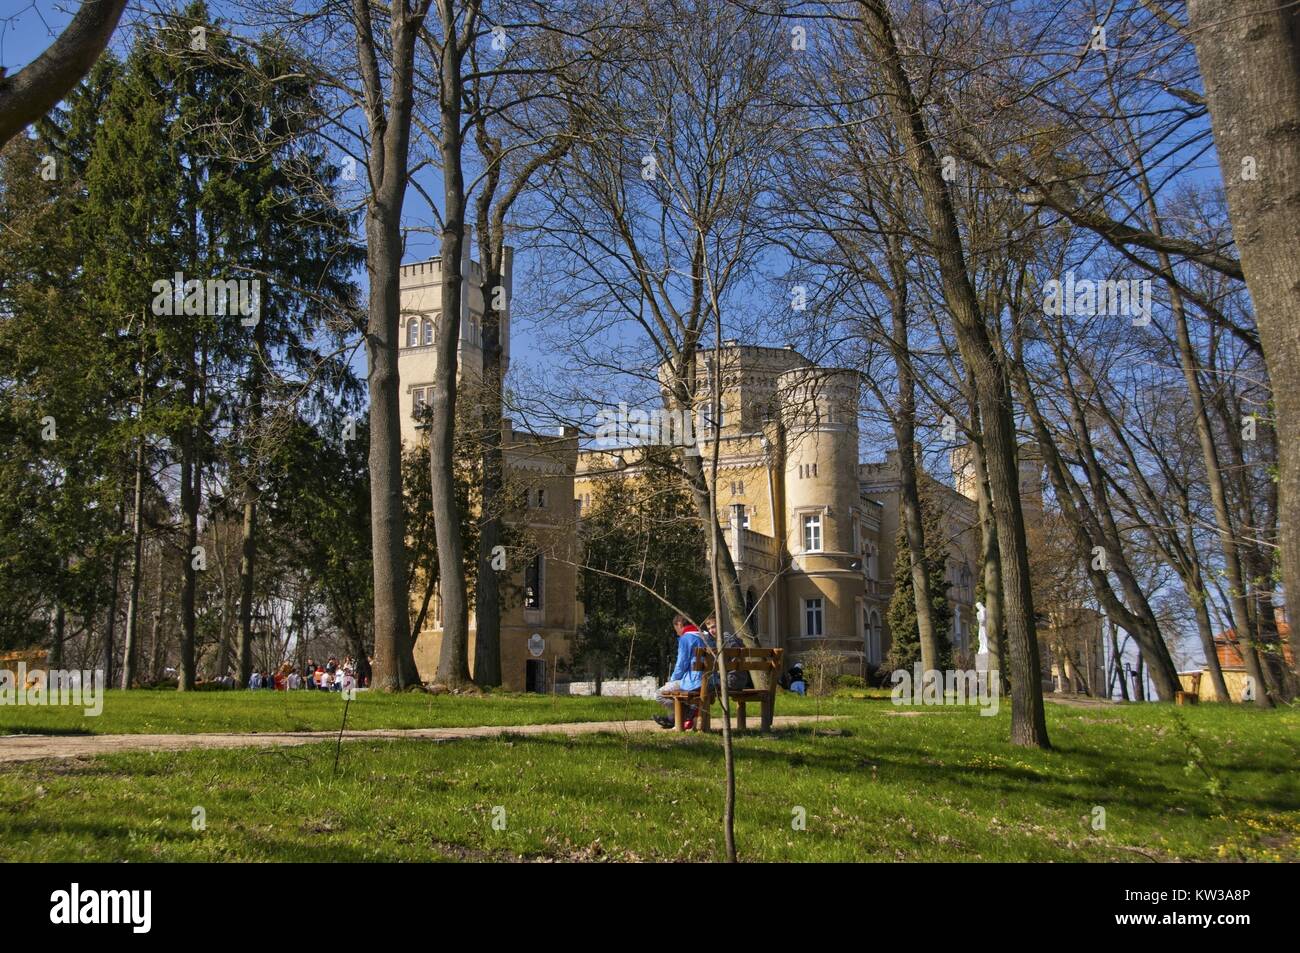 Neo-Gothic Narzymski Palace, Jablonowo Pomorskie, Kuyavian-Pomeranian Voivodeship, Poland Stock Photo